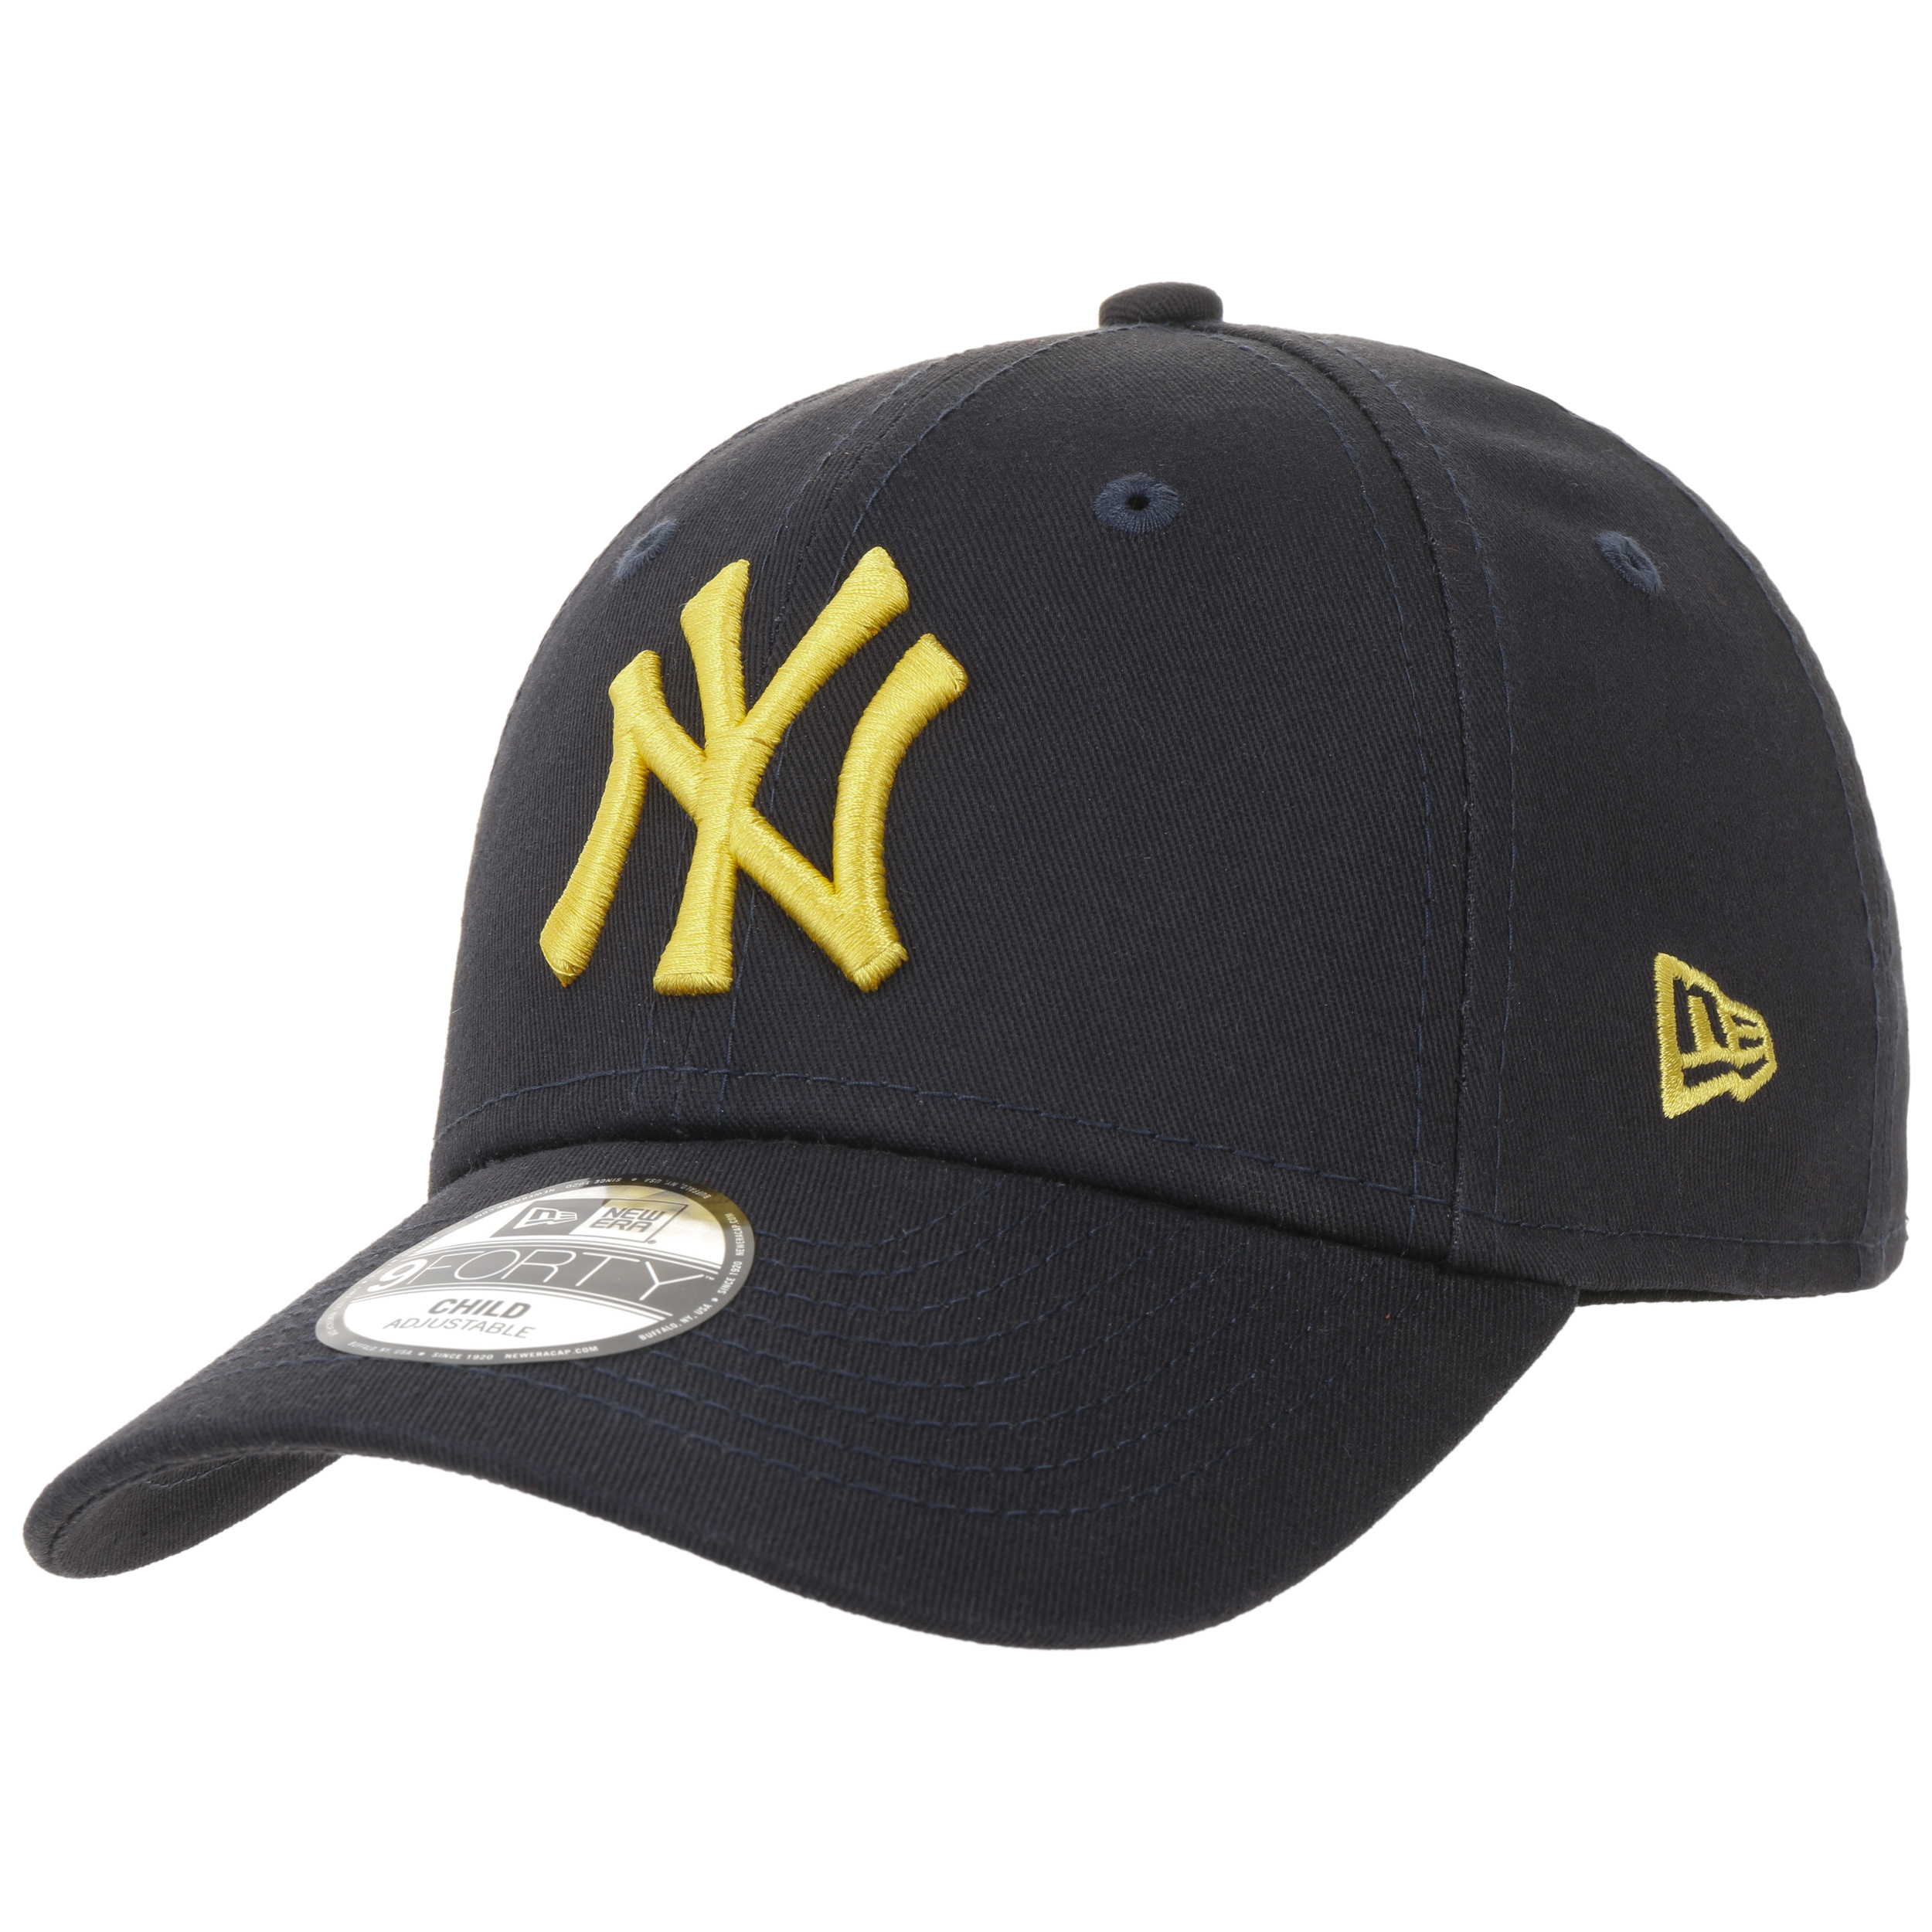 MLB Yankees Kids Cap by Era - €